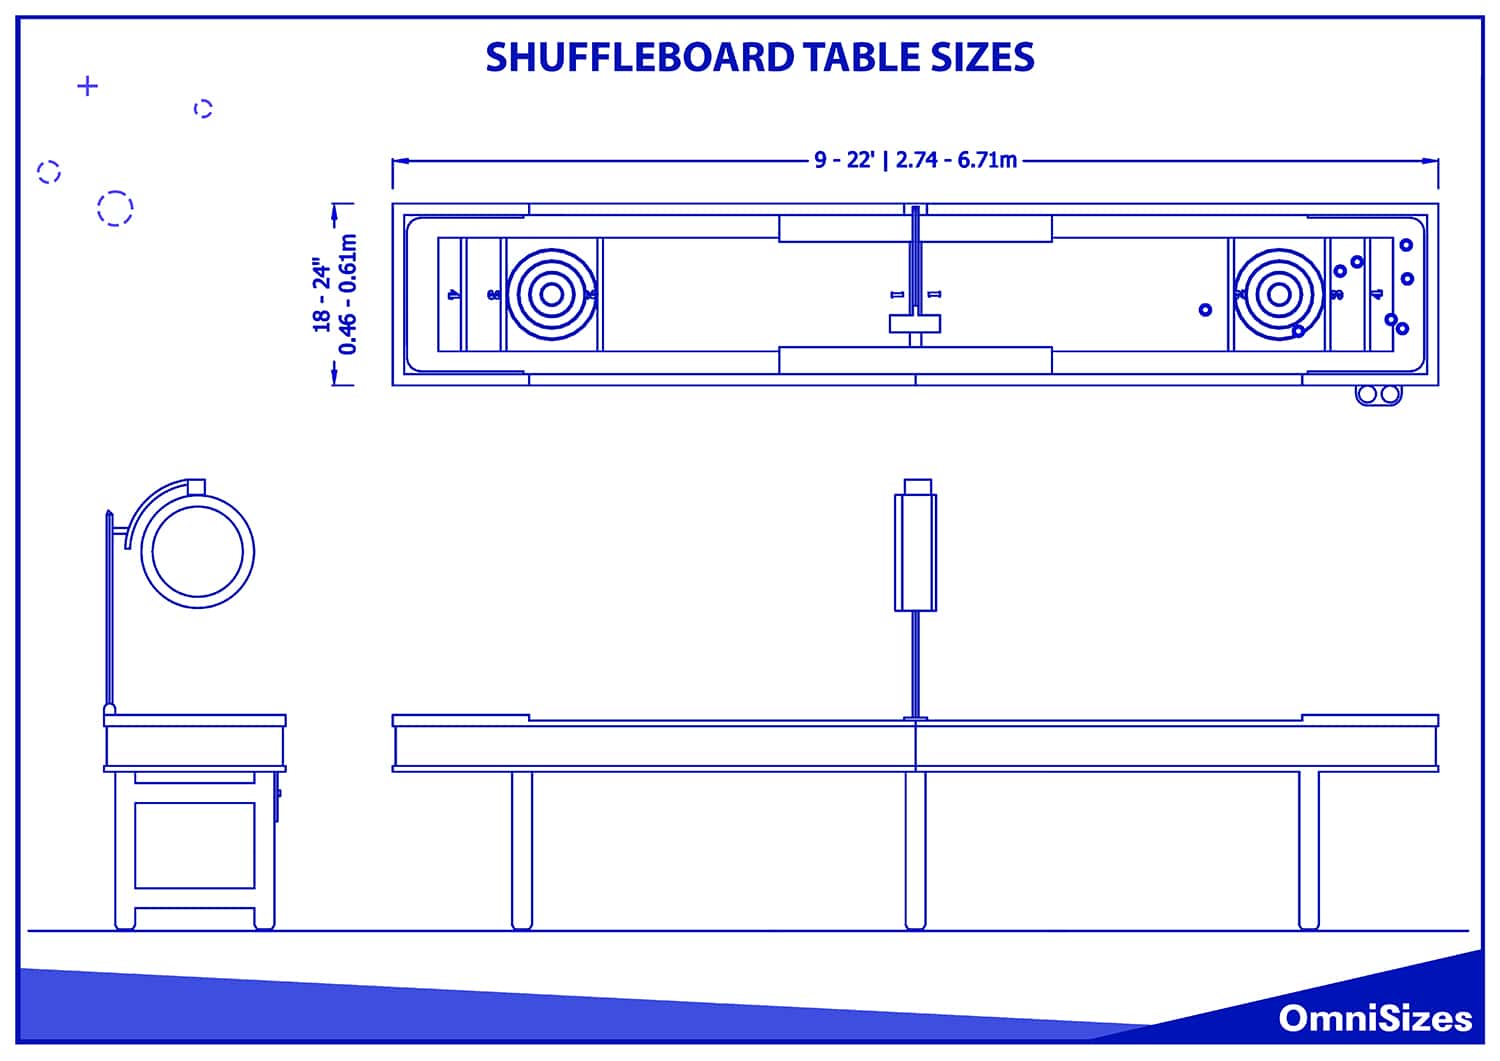 Shuffleboard table sizes